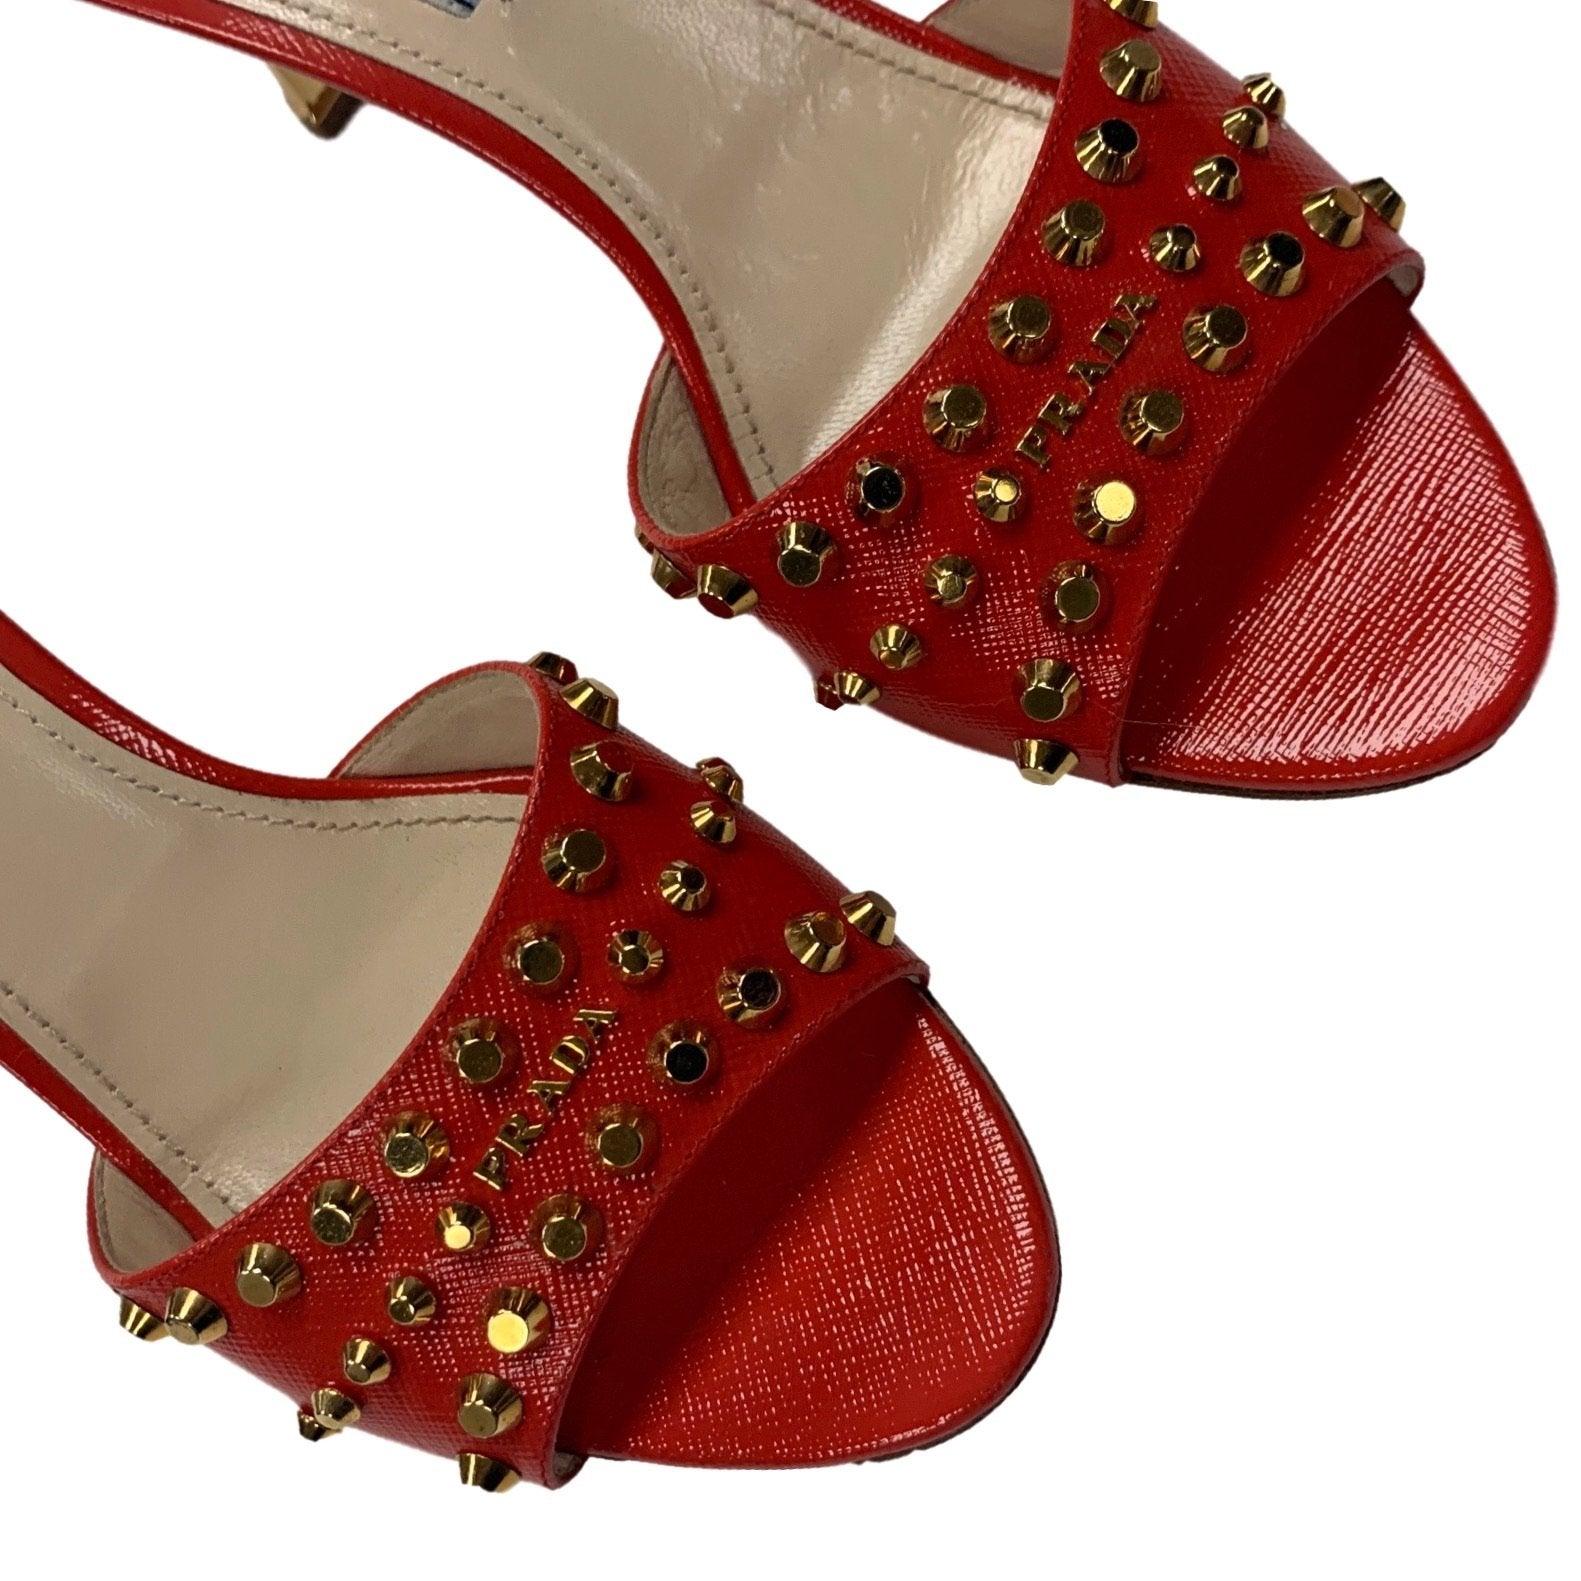 Prada Red Studded Kitten Heels - Shoes